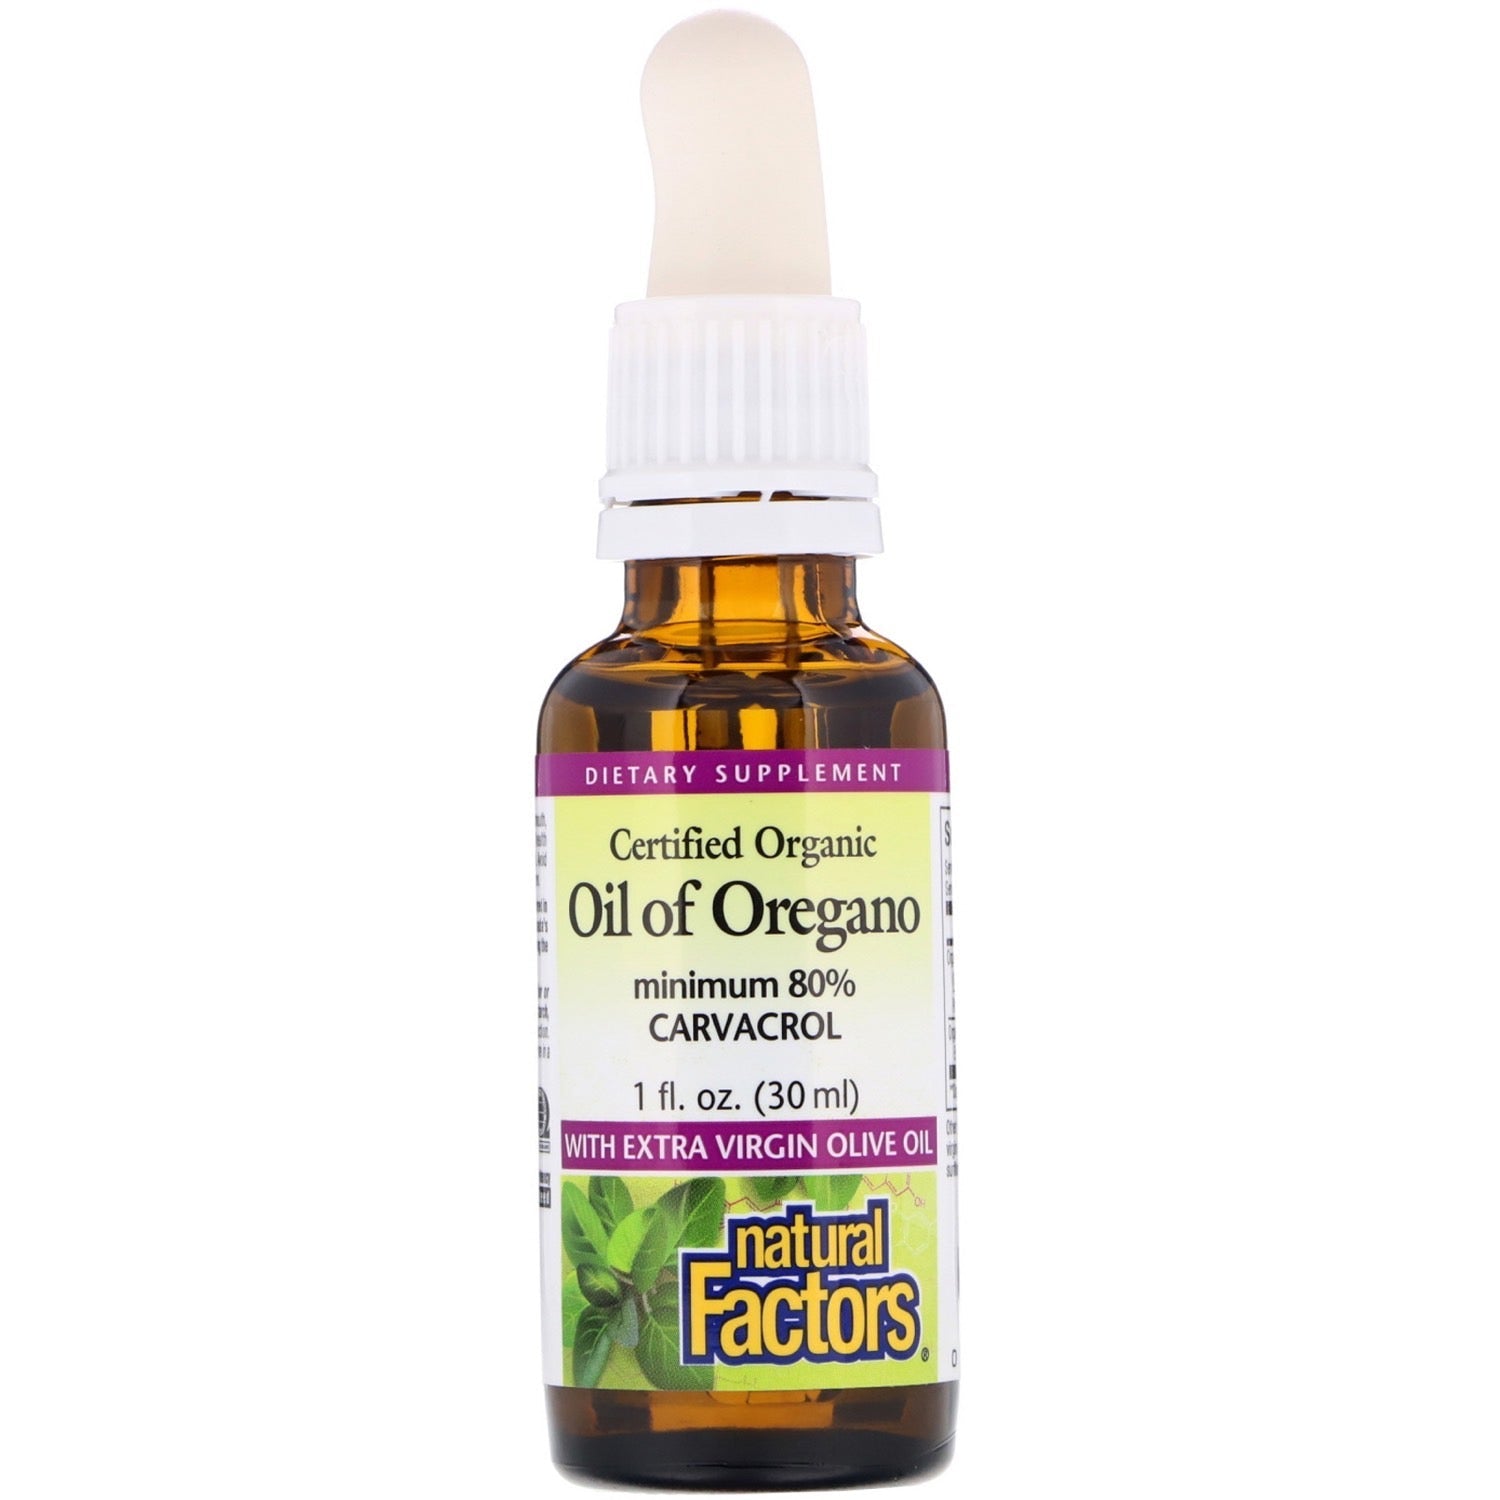 Natural Factors Certified Organic Oil Of Oregano Dietary Supplement, 1 Fl. Oz